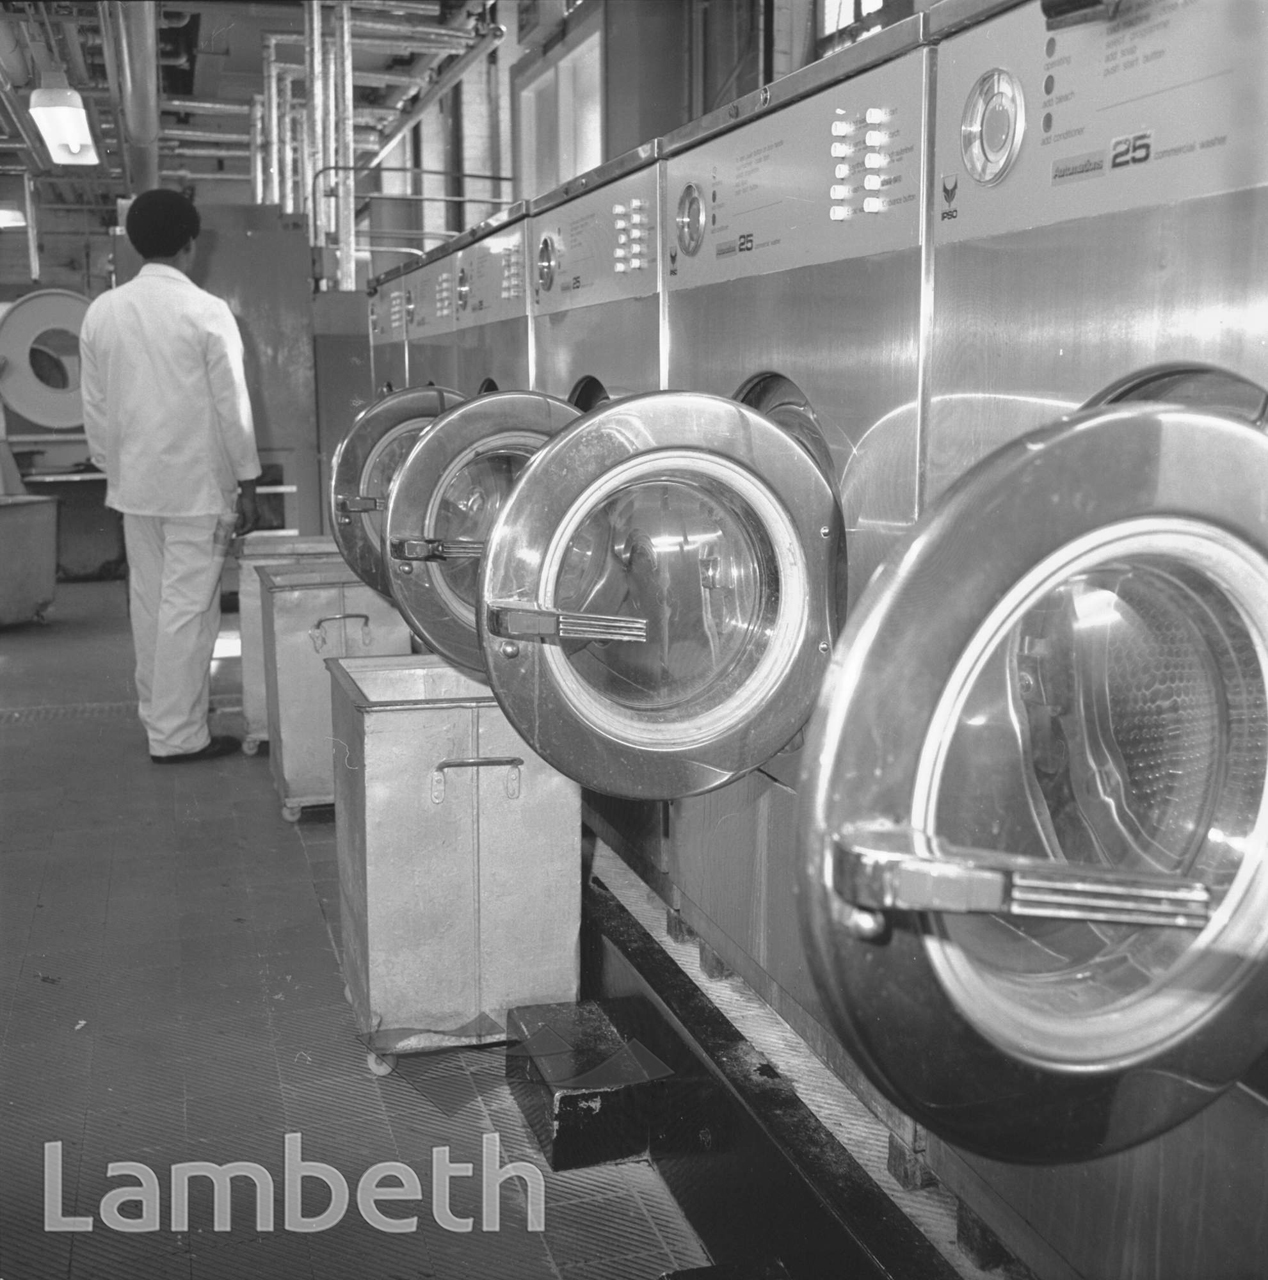 WASHING MACHINES, LAMBETH BATHS, LAMBETH WALK